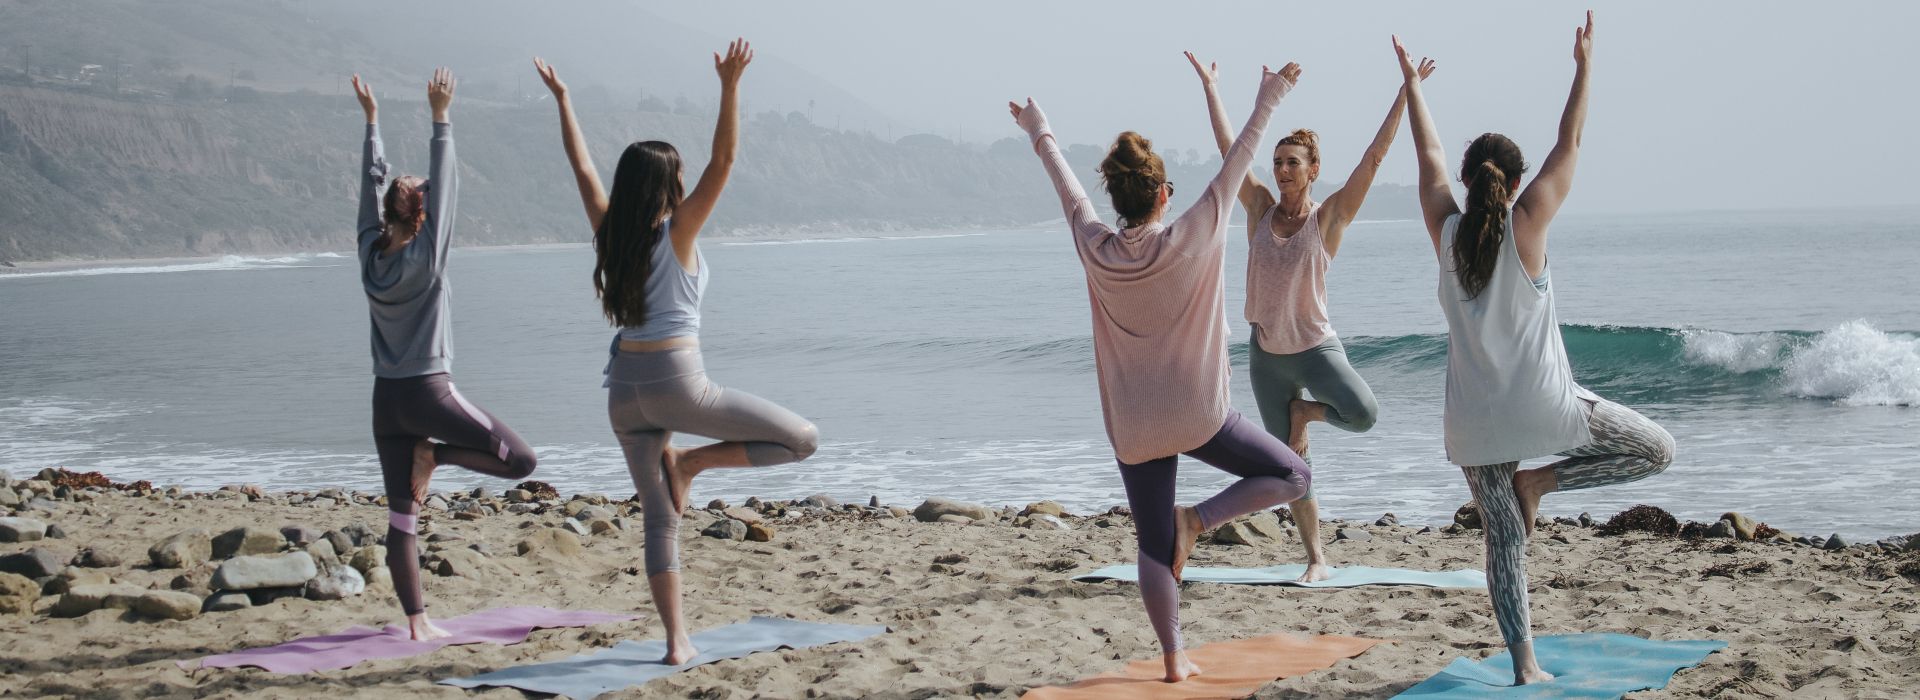 Programm Listing Category Bridal Yoga Frauengruppe am Strand beim Yoga auf bunten Matten